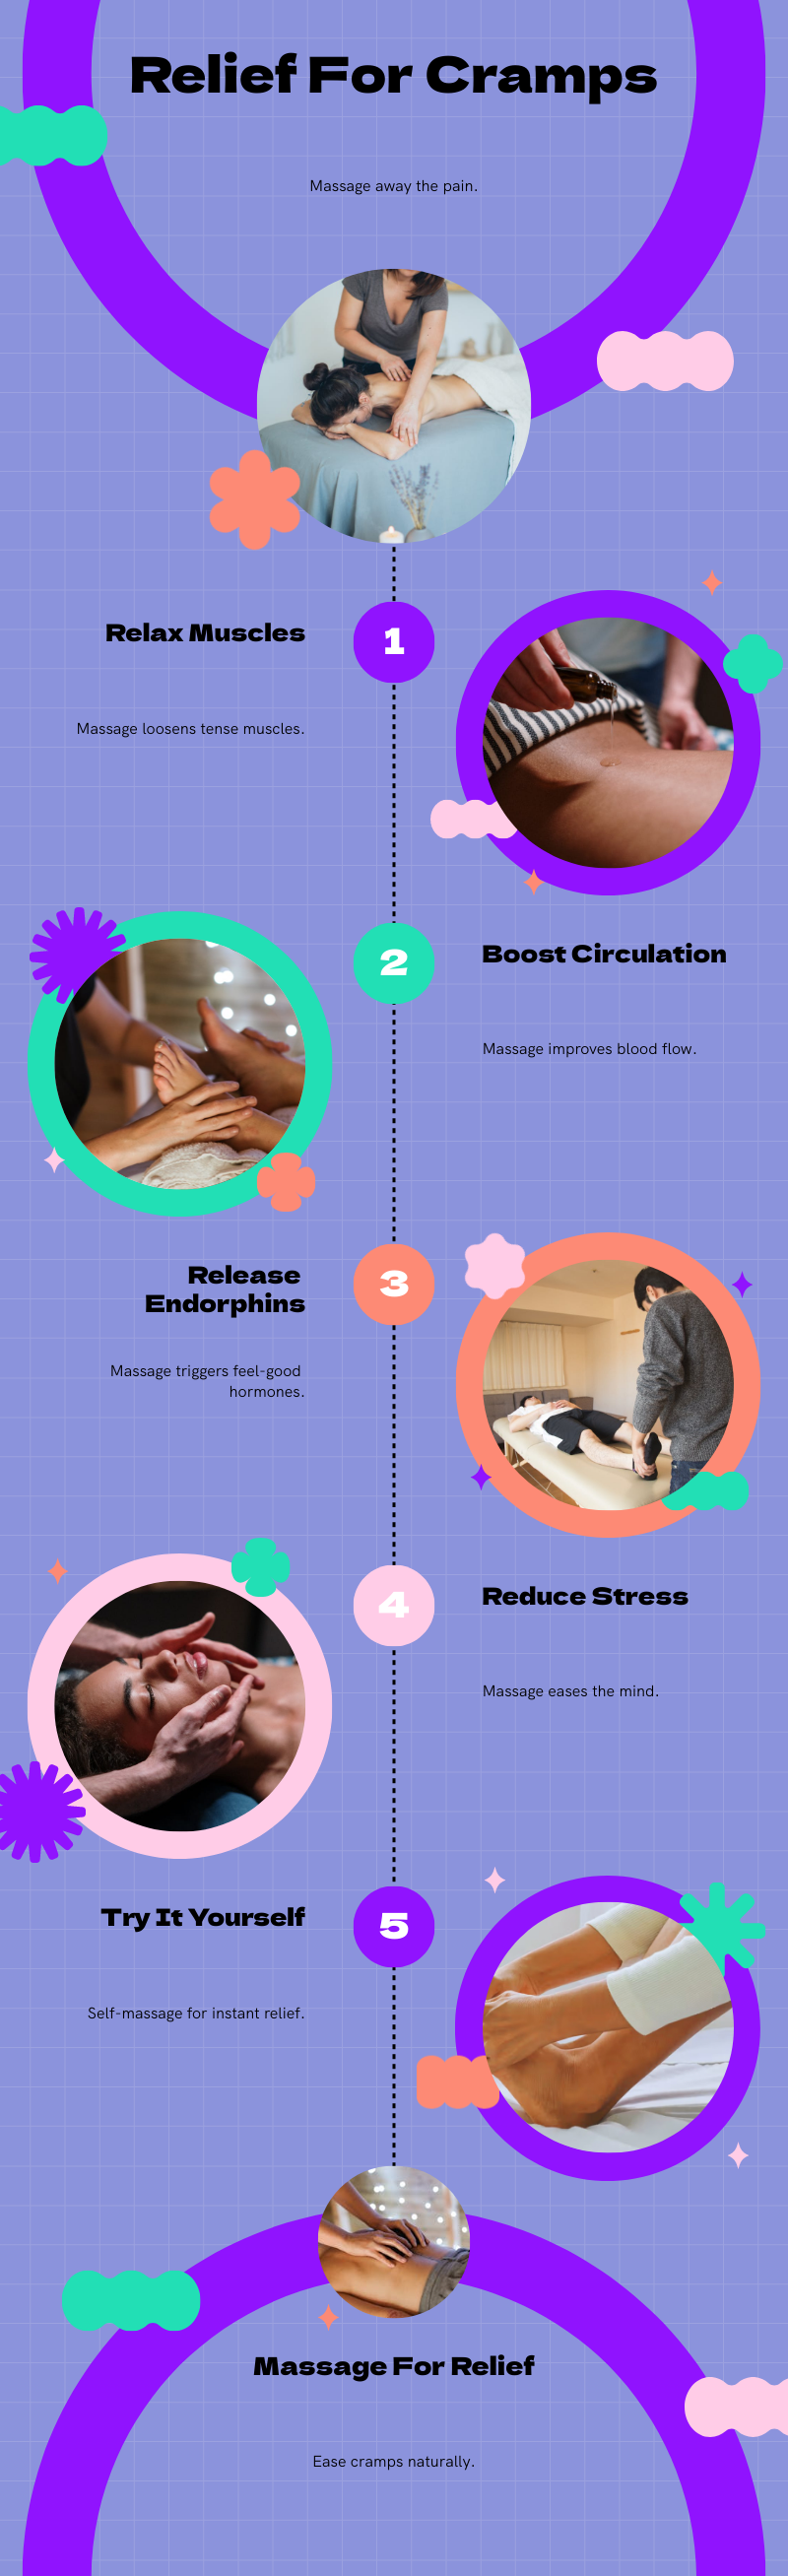 Menstrual cramps massage benefits